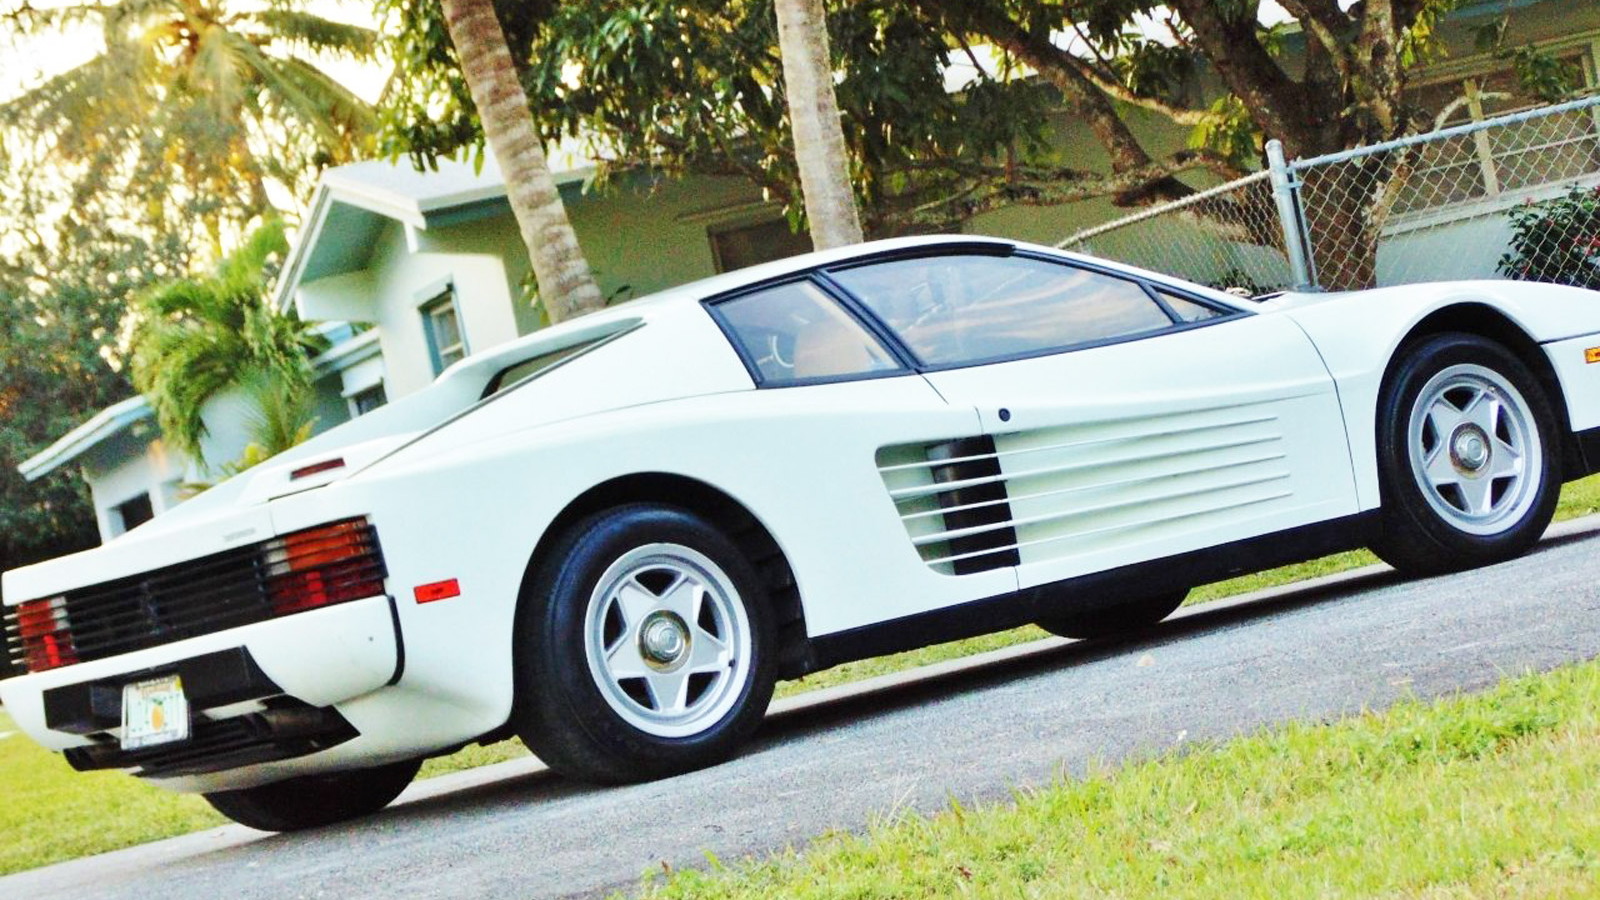 1986 Ferrari Testarossa from ‘Miami Vice’ - Image via eBay Motors